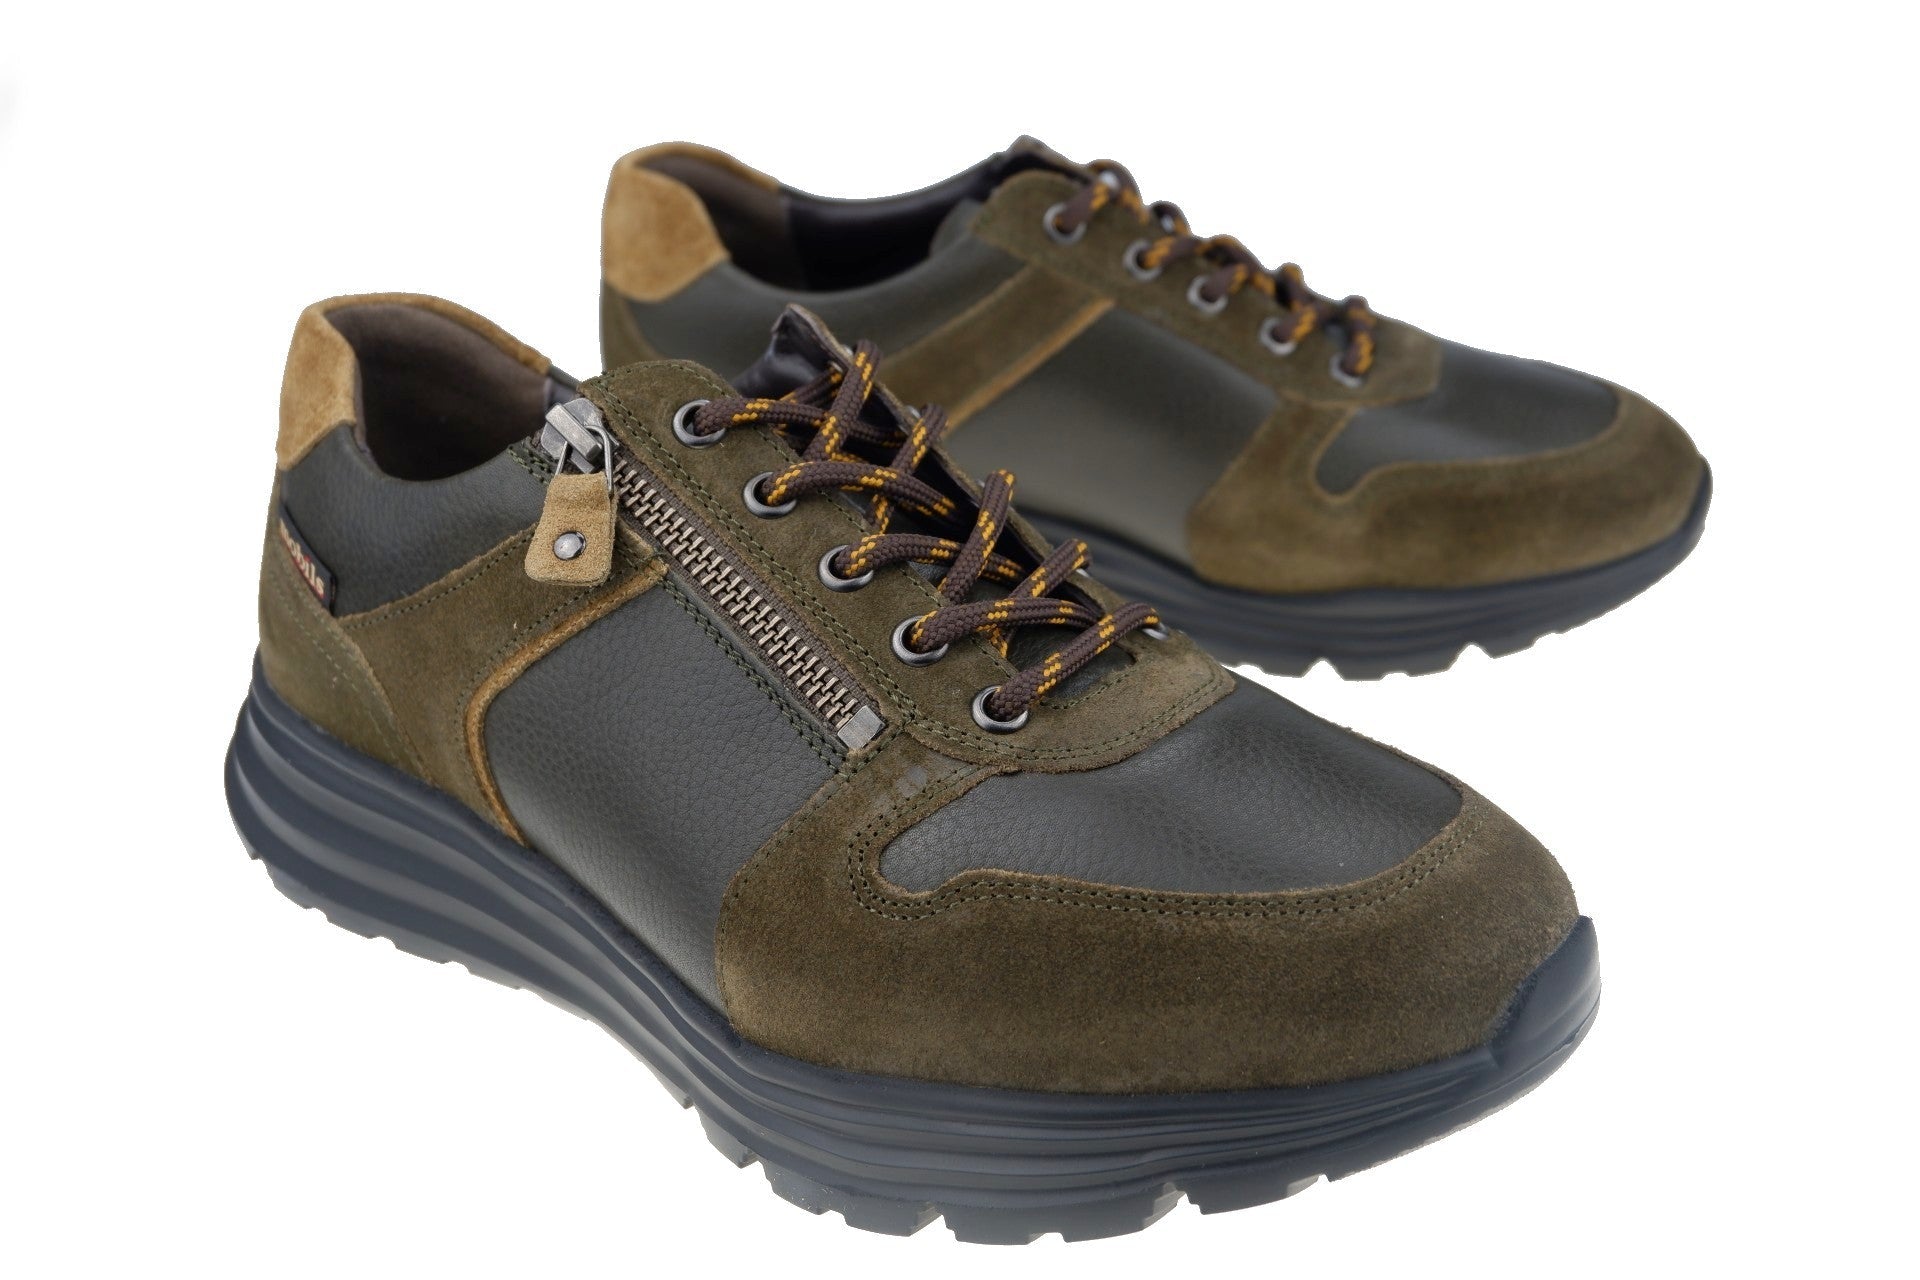 Brayan' men's ergonomic wide fit shoe - Green - ChaplinshoesBrayan' men's ergonomic wide fit shoe - GreenMephisto